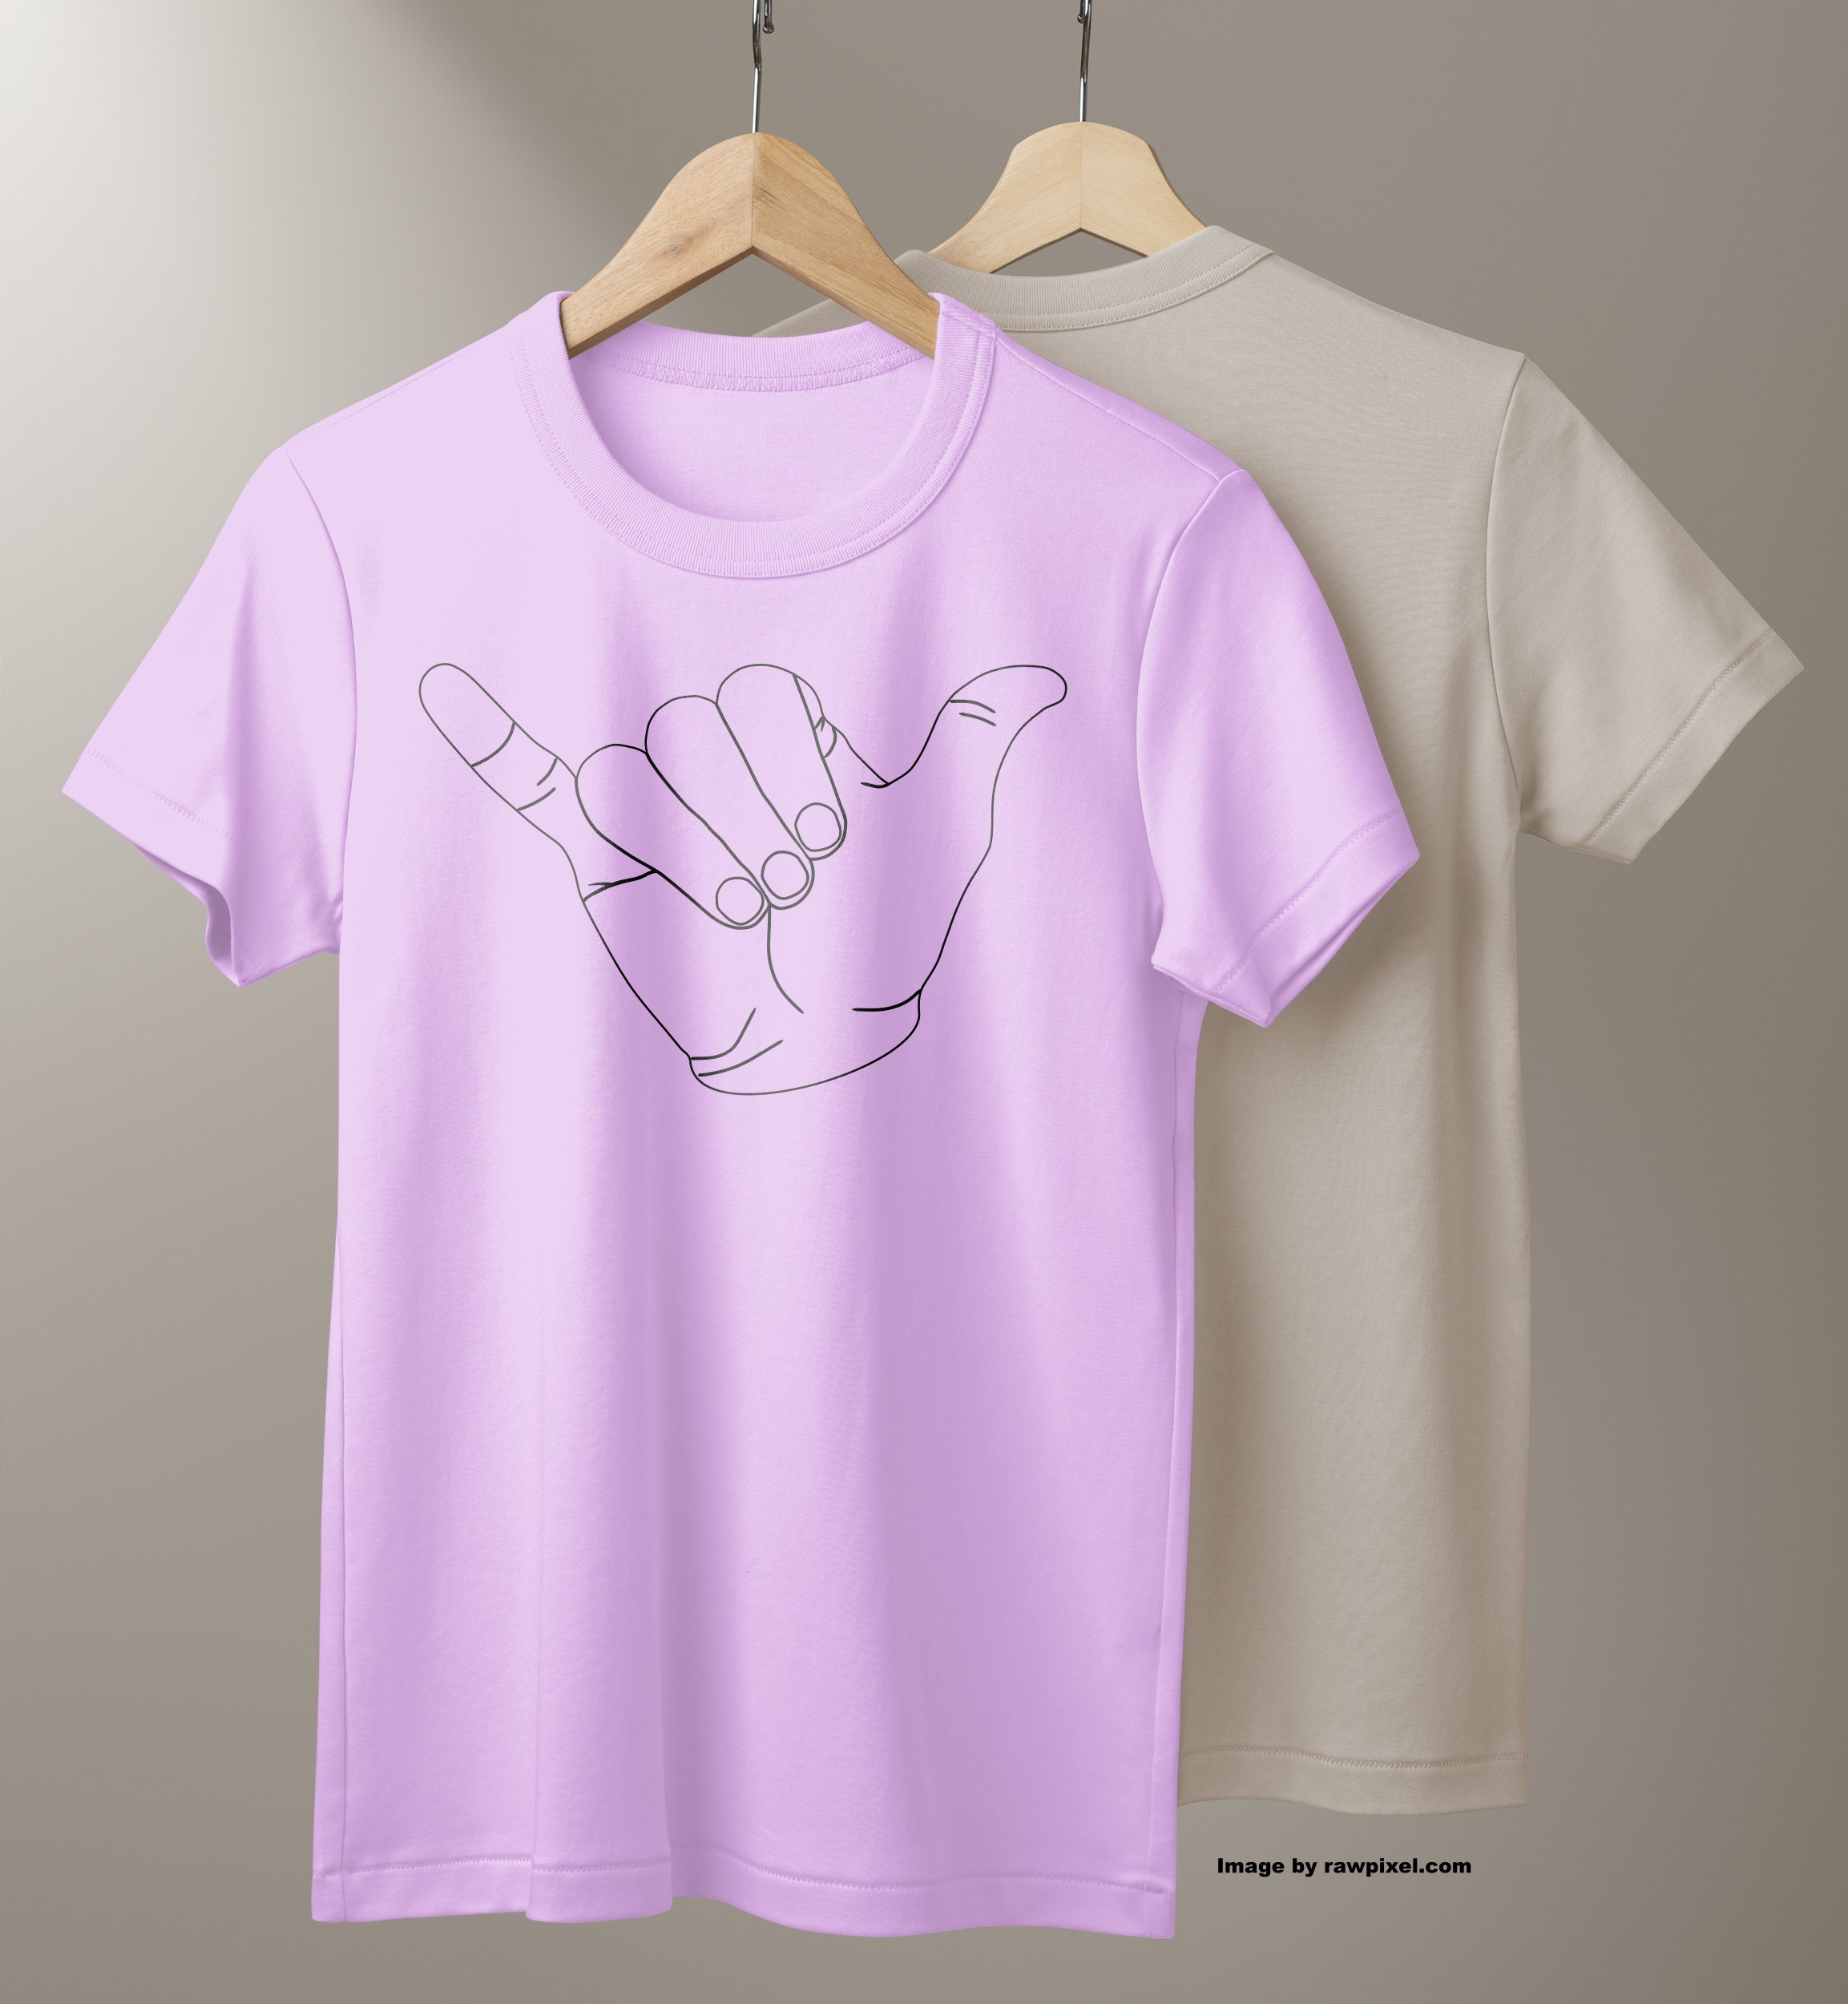 Shaka Silhouette Svg Shaka Outline Svg Shaka Tshirt Designs - Etsy ...